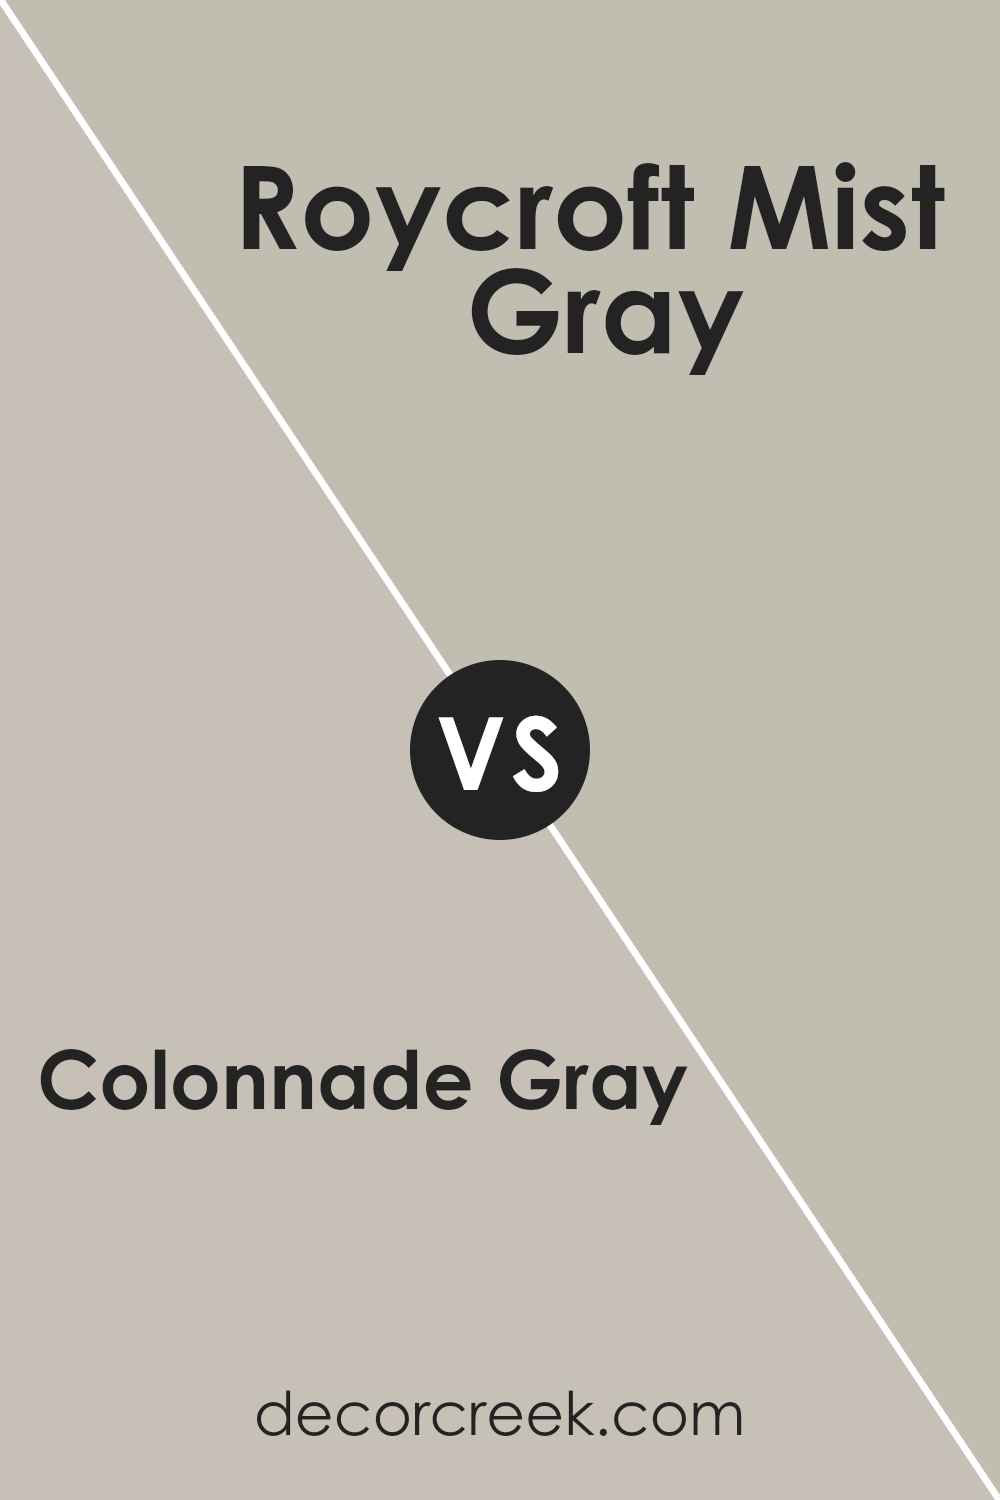 colonnade_gray_sw_7641_vs_roycroft_mist_gray_sw_2844